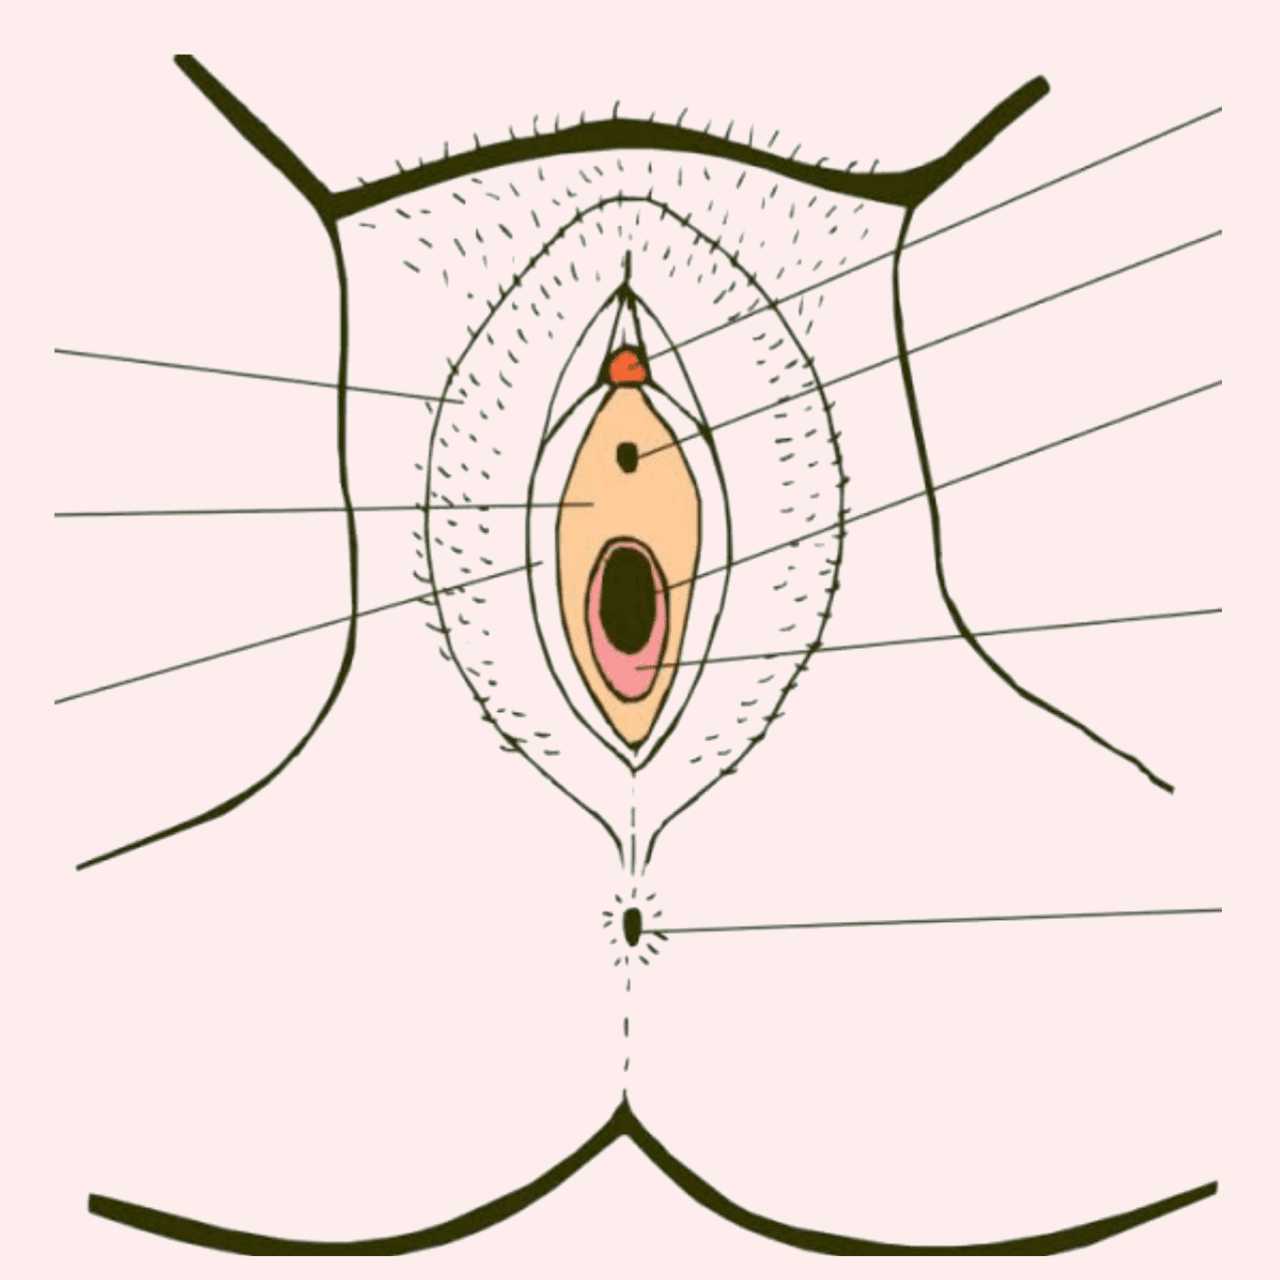 Clitorial hood